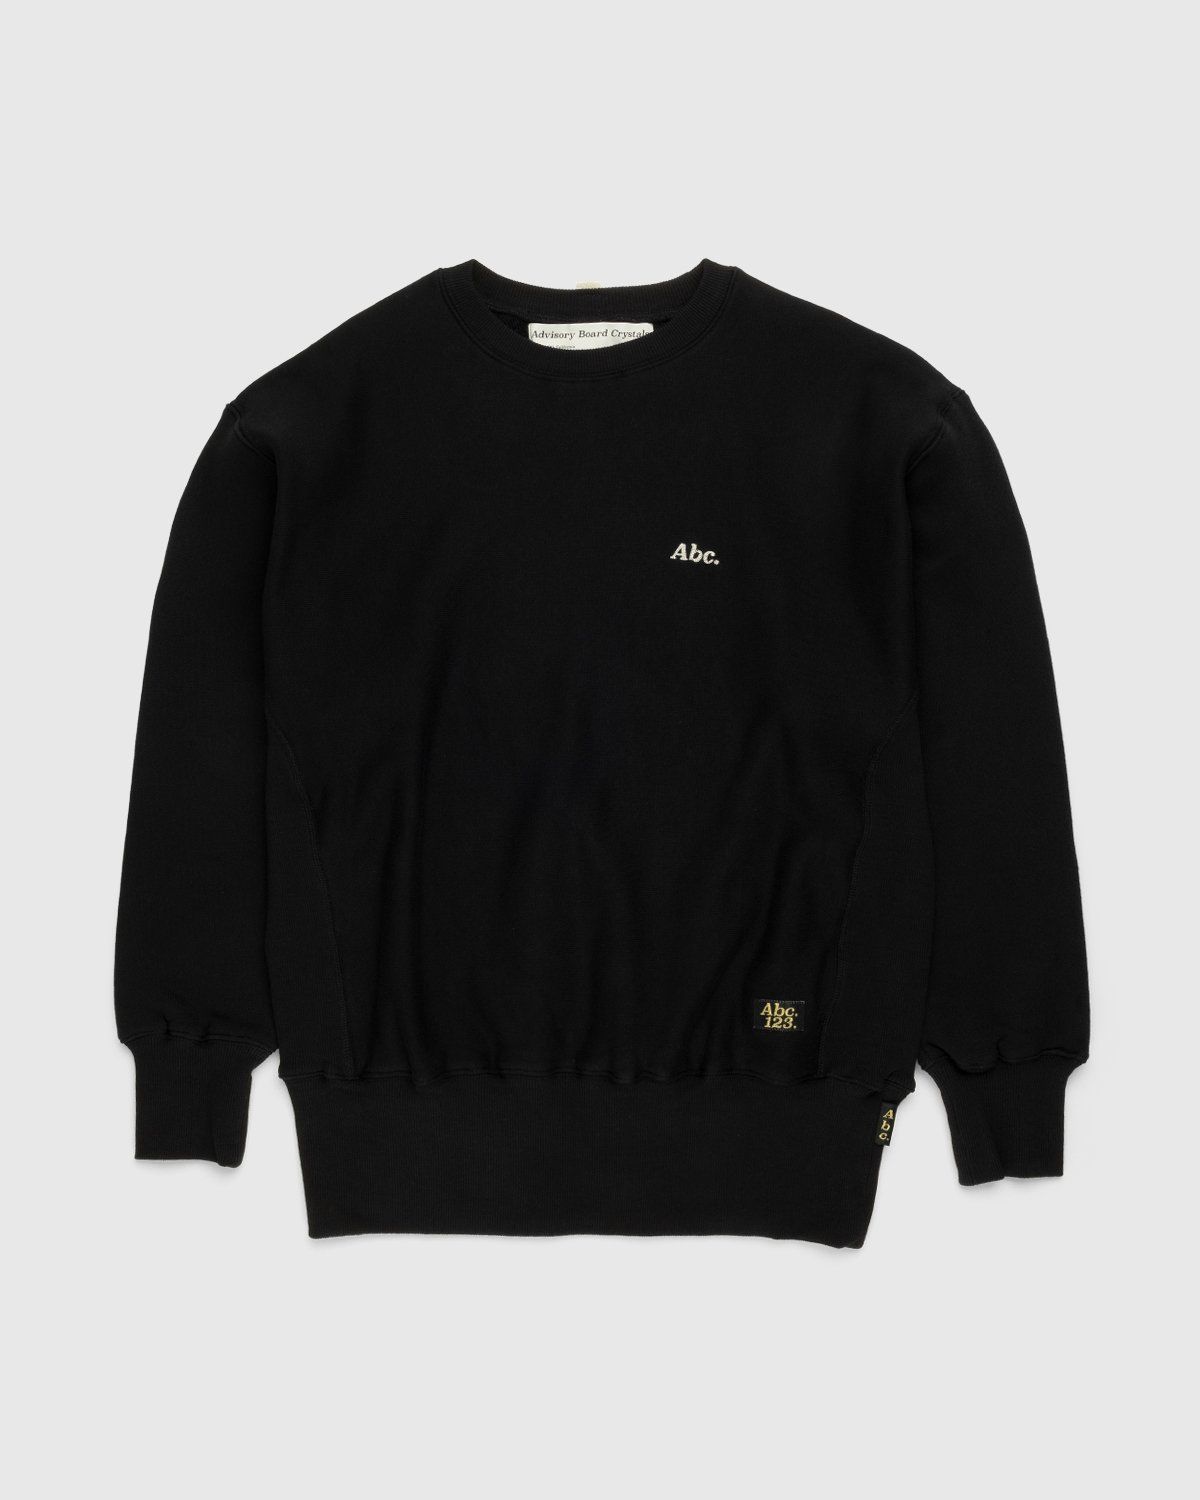 Abc. – French Terry Crewneck Sweatshirt Anthracite - Sweatshirts - Black - Image 1